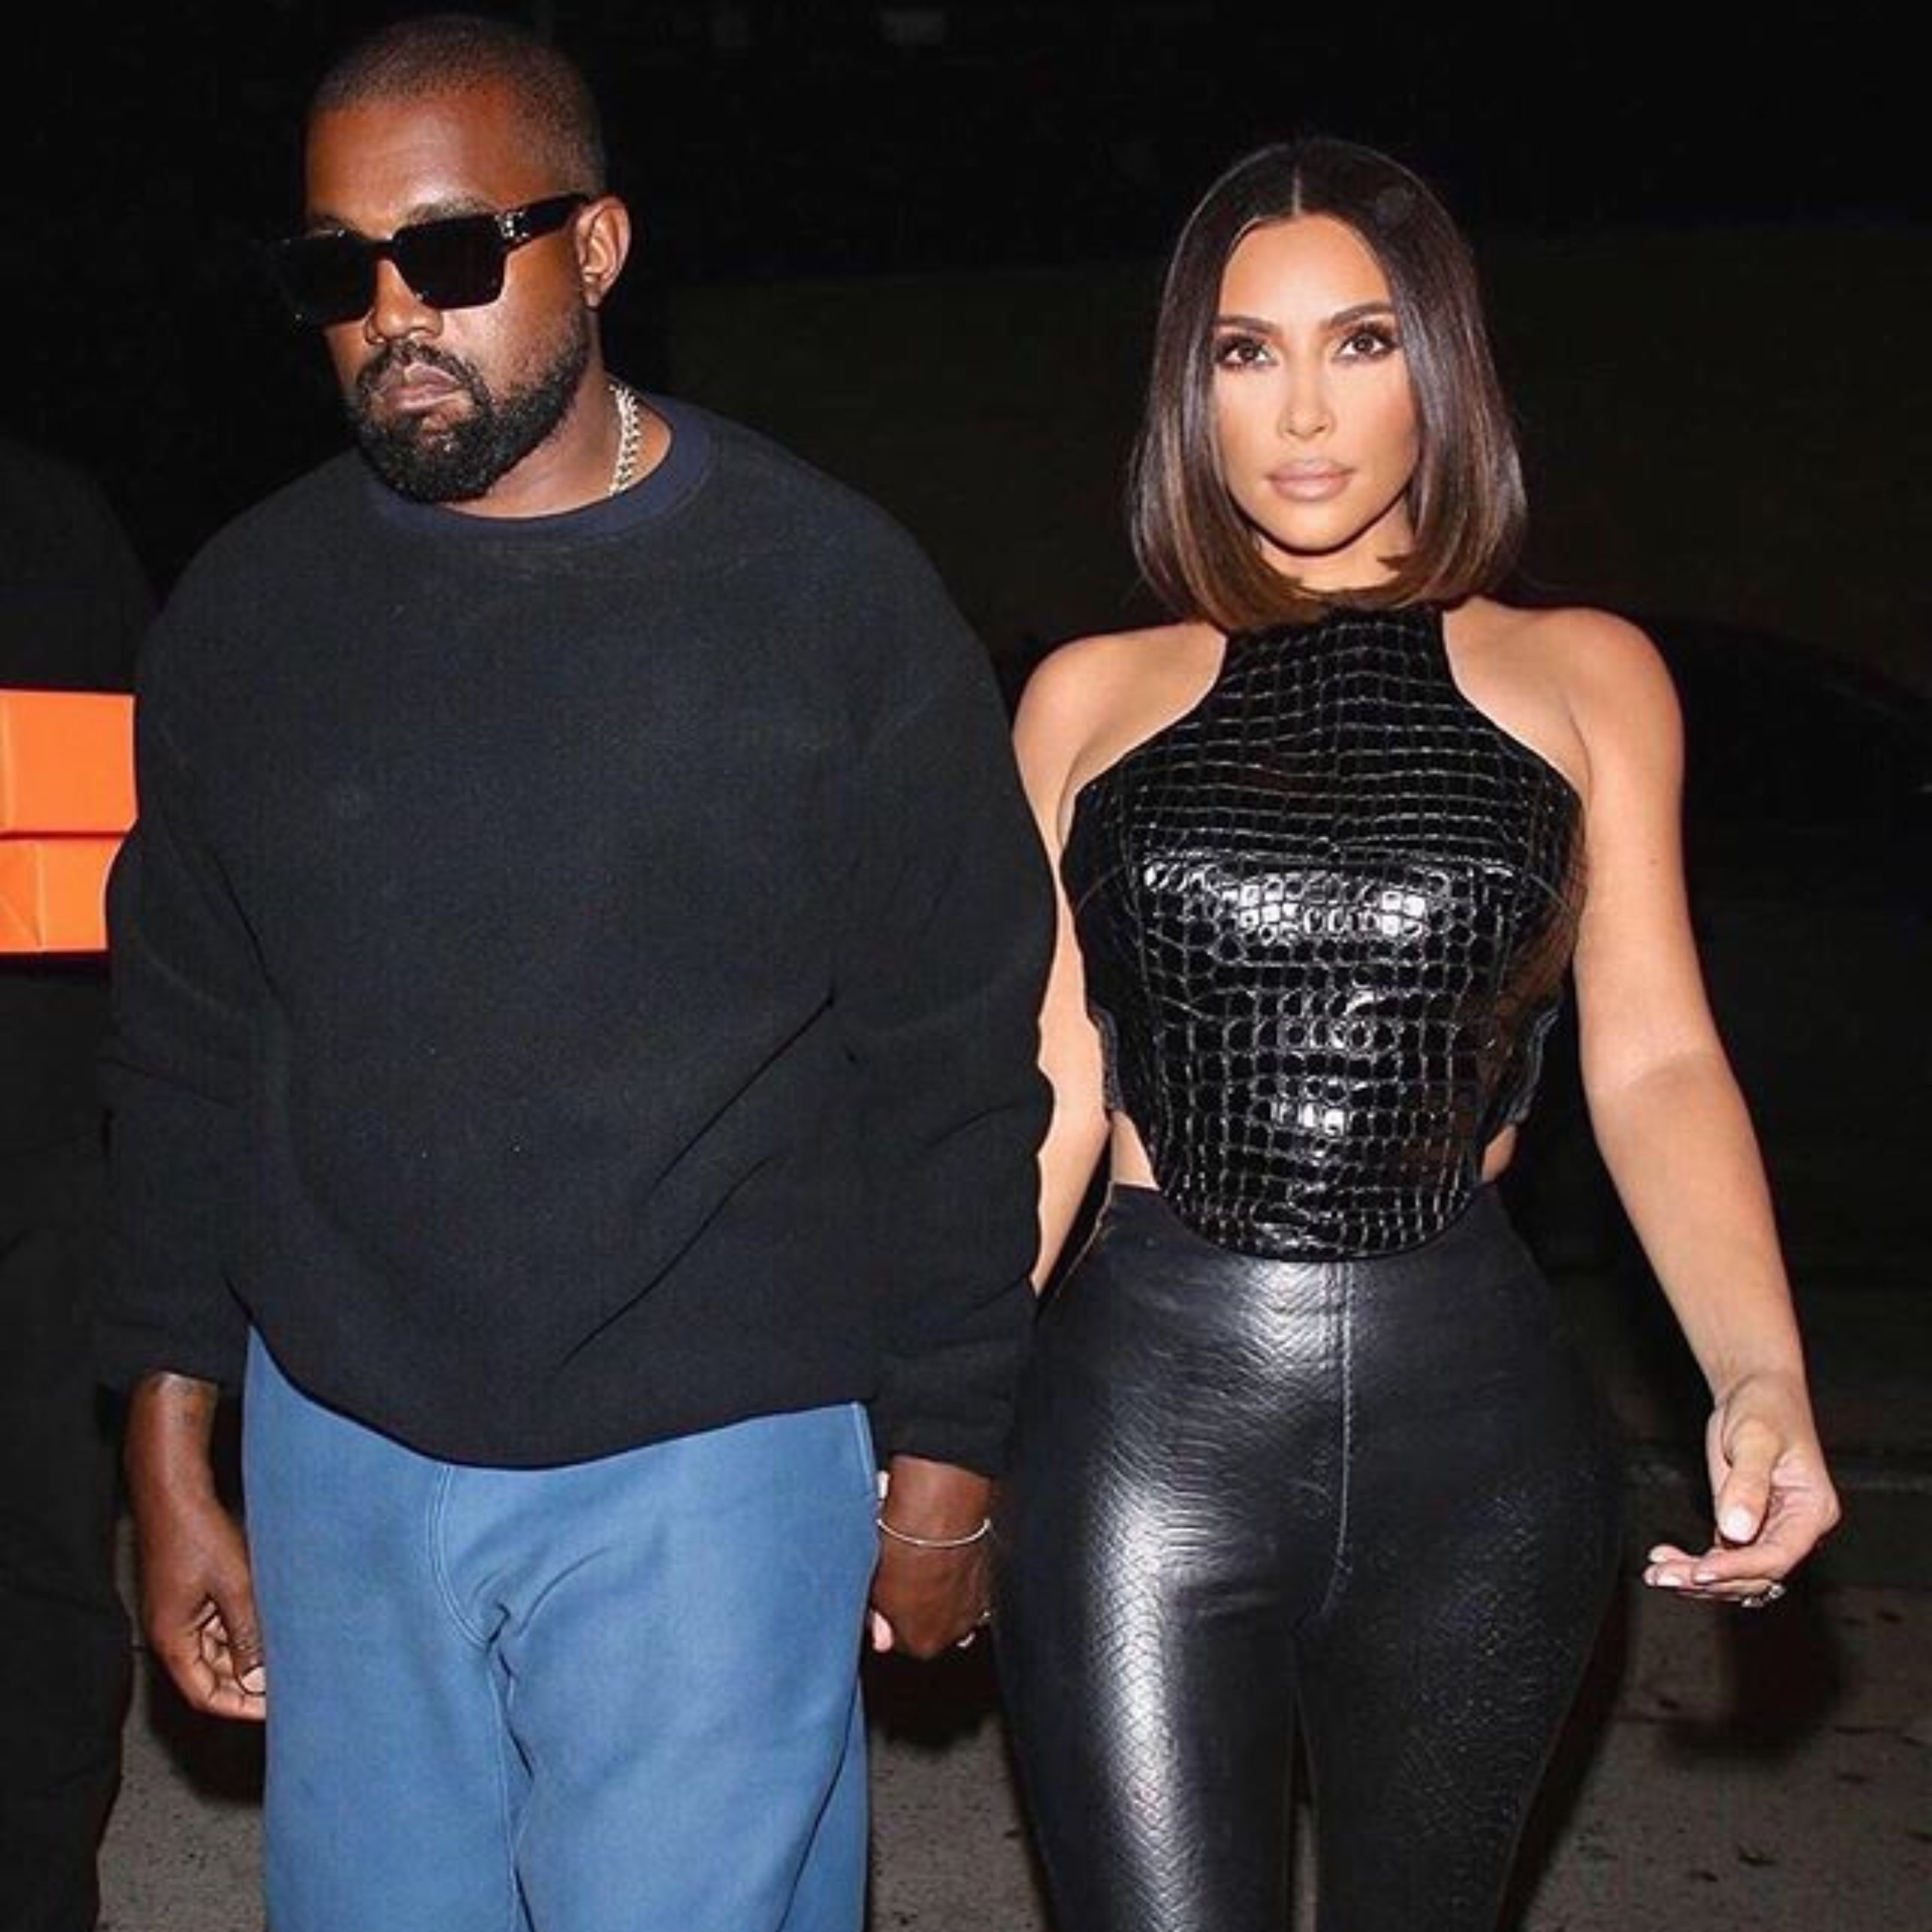 Kanye West sale de la vida de Kim Kardashian, pero no demasiado…